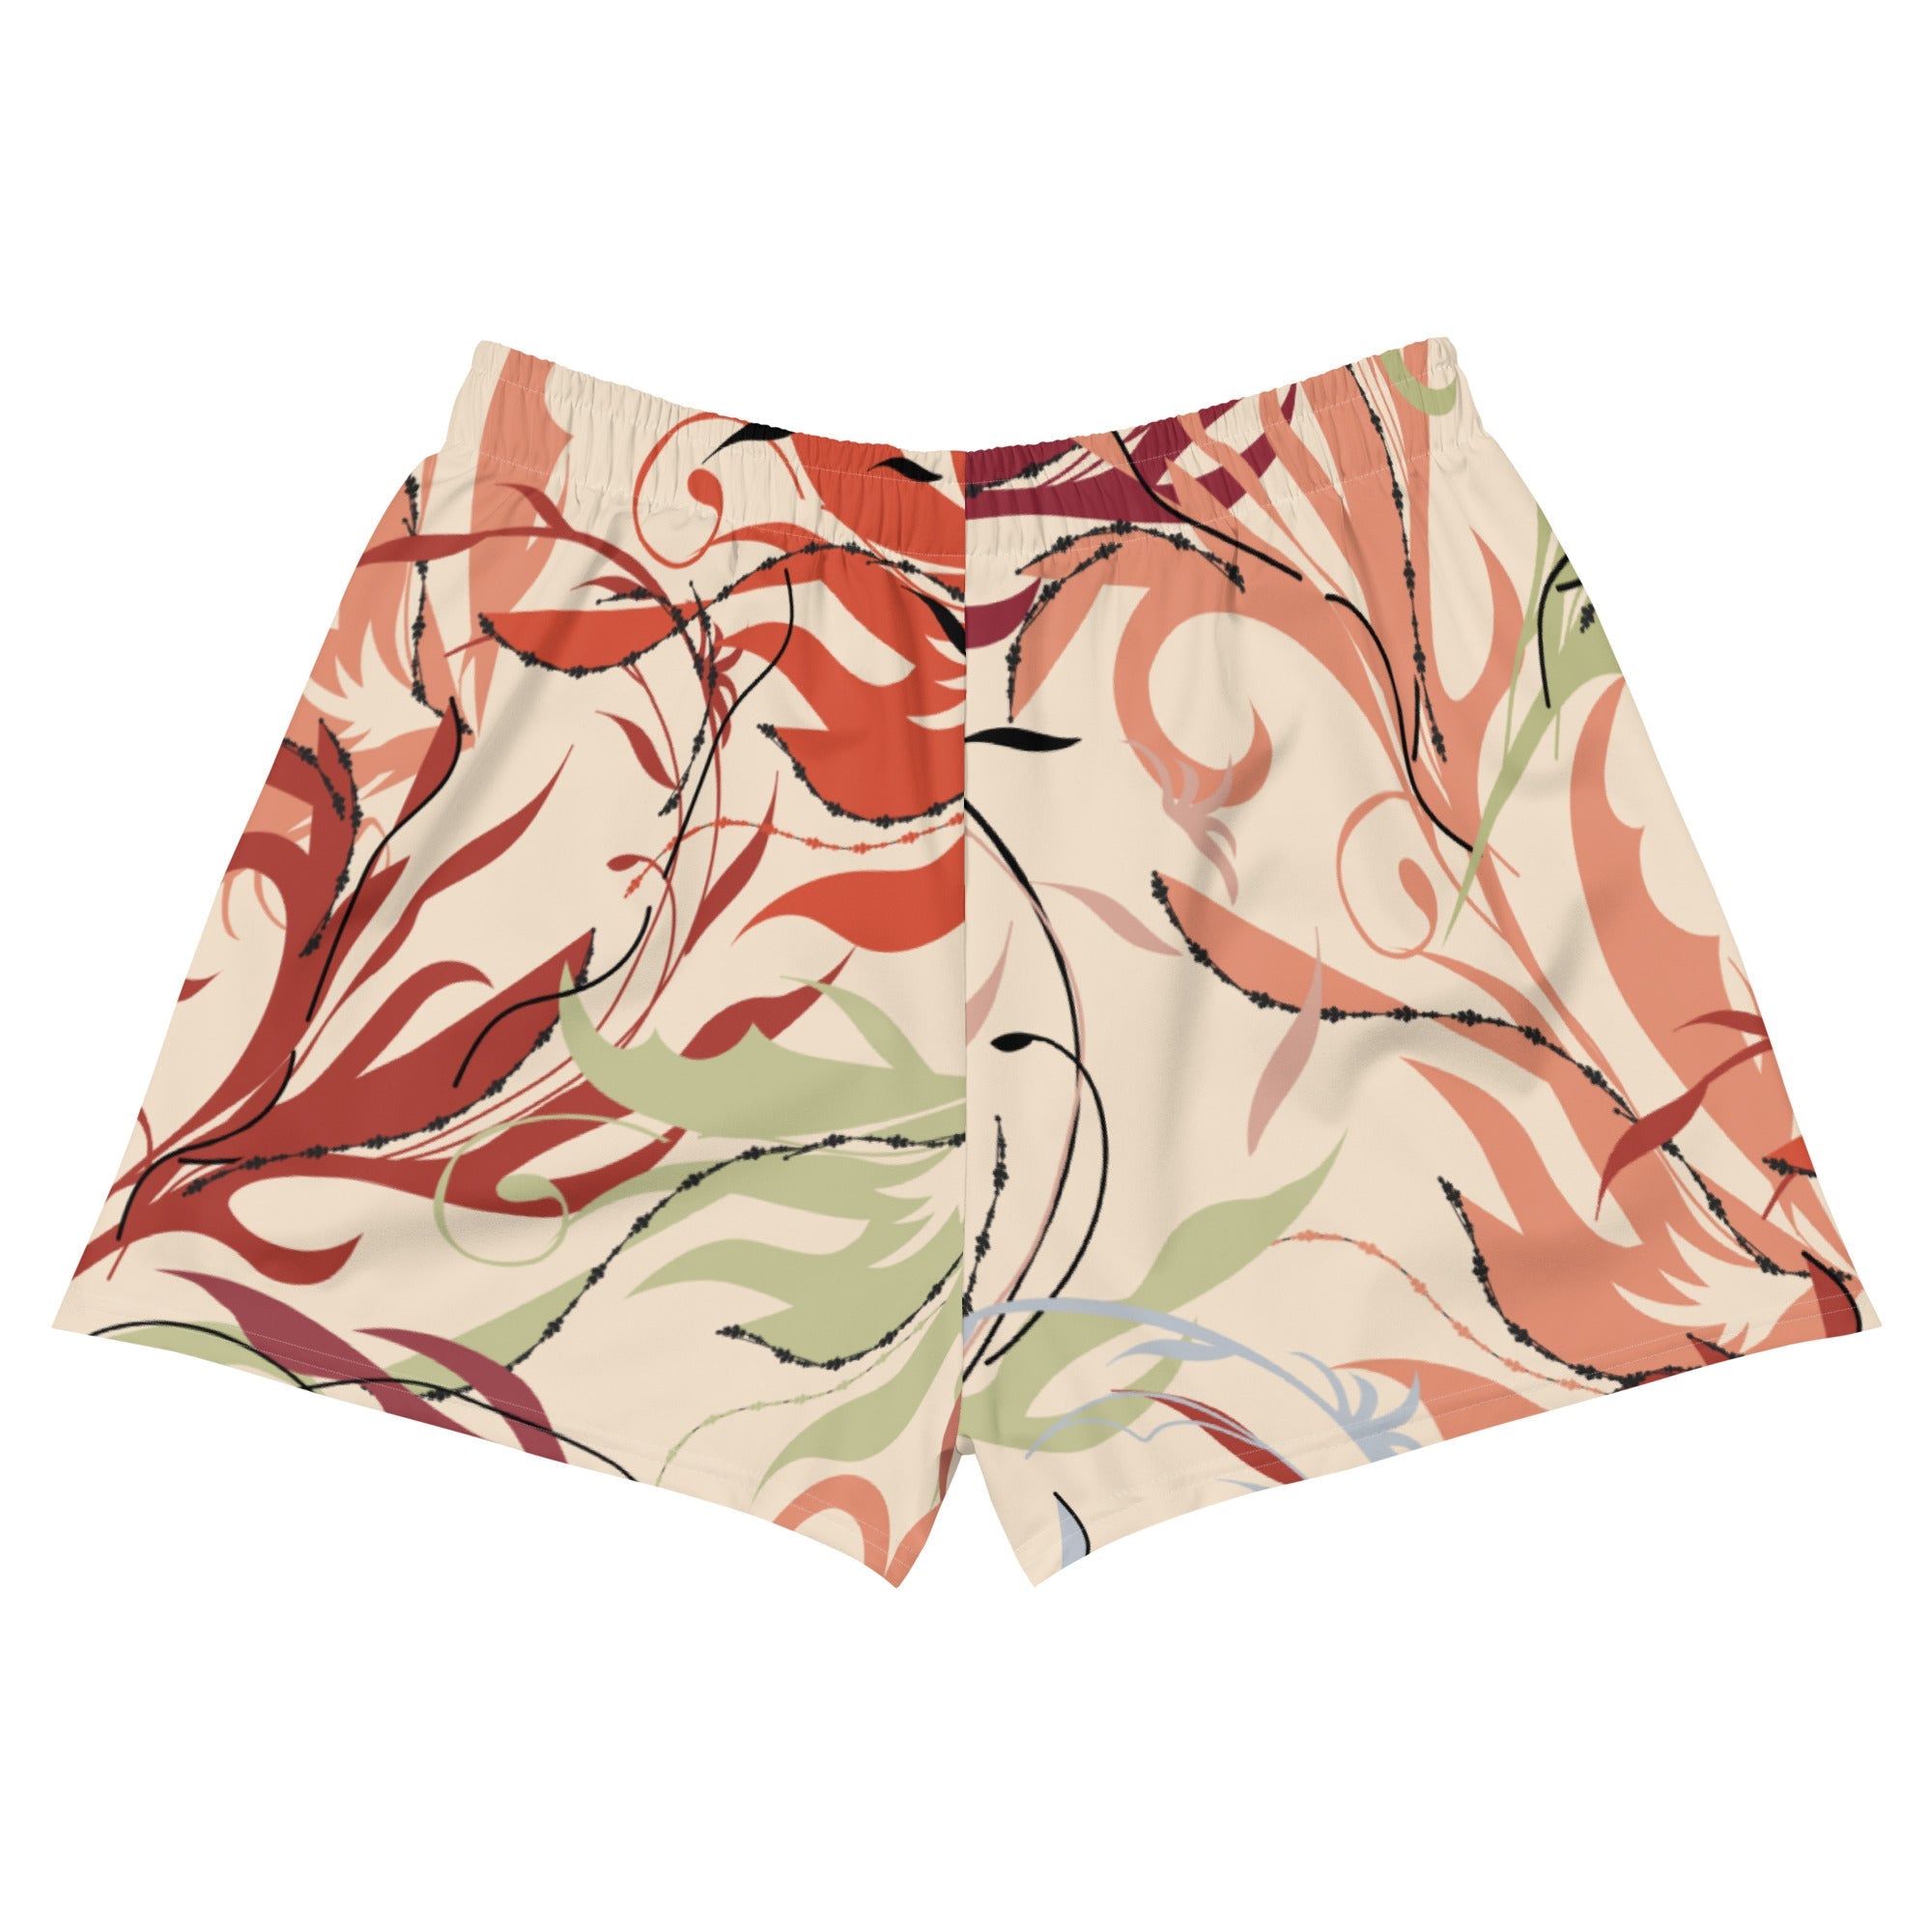 Recycelte Sport-Shorts für Damen florales Muster - earlyfish